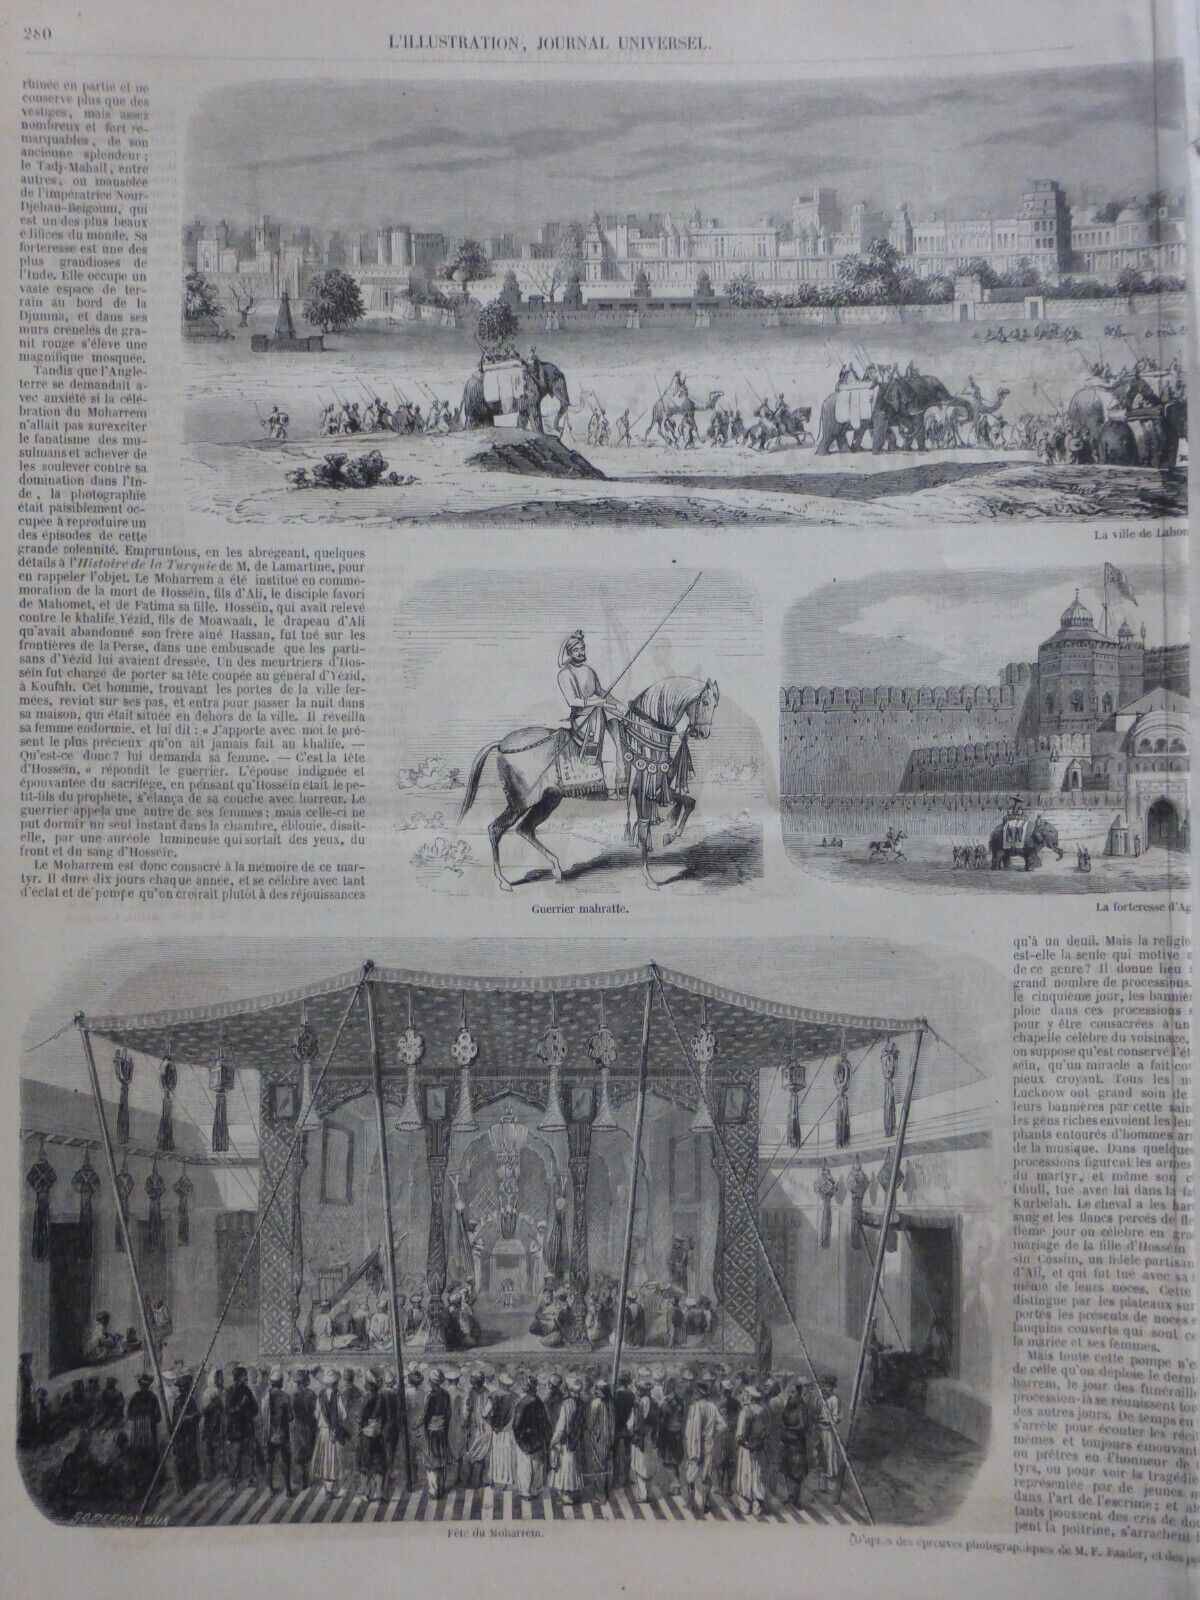 1857 I INDIA FETE MOHARREM WARRIOR MAHRATTE